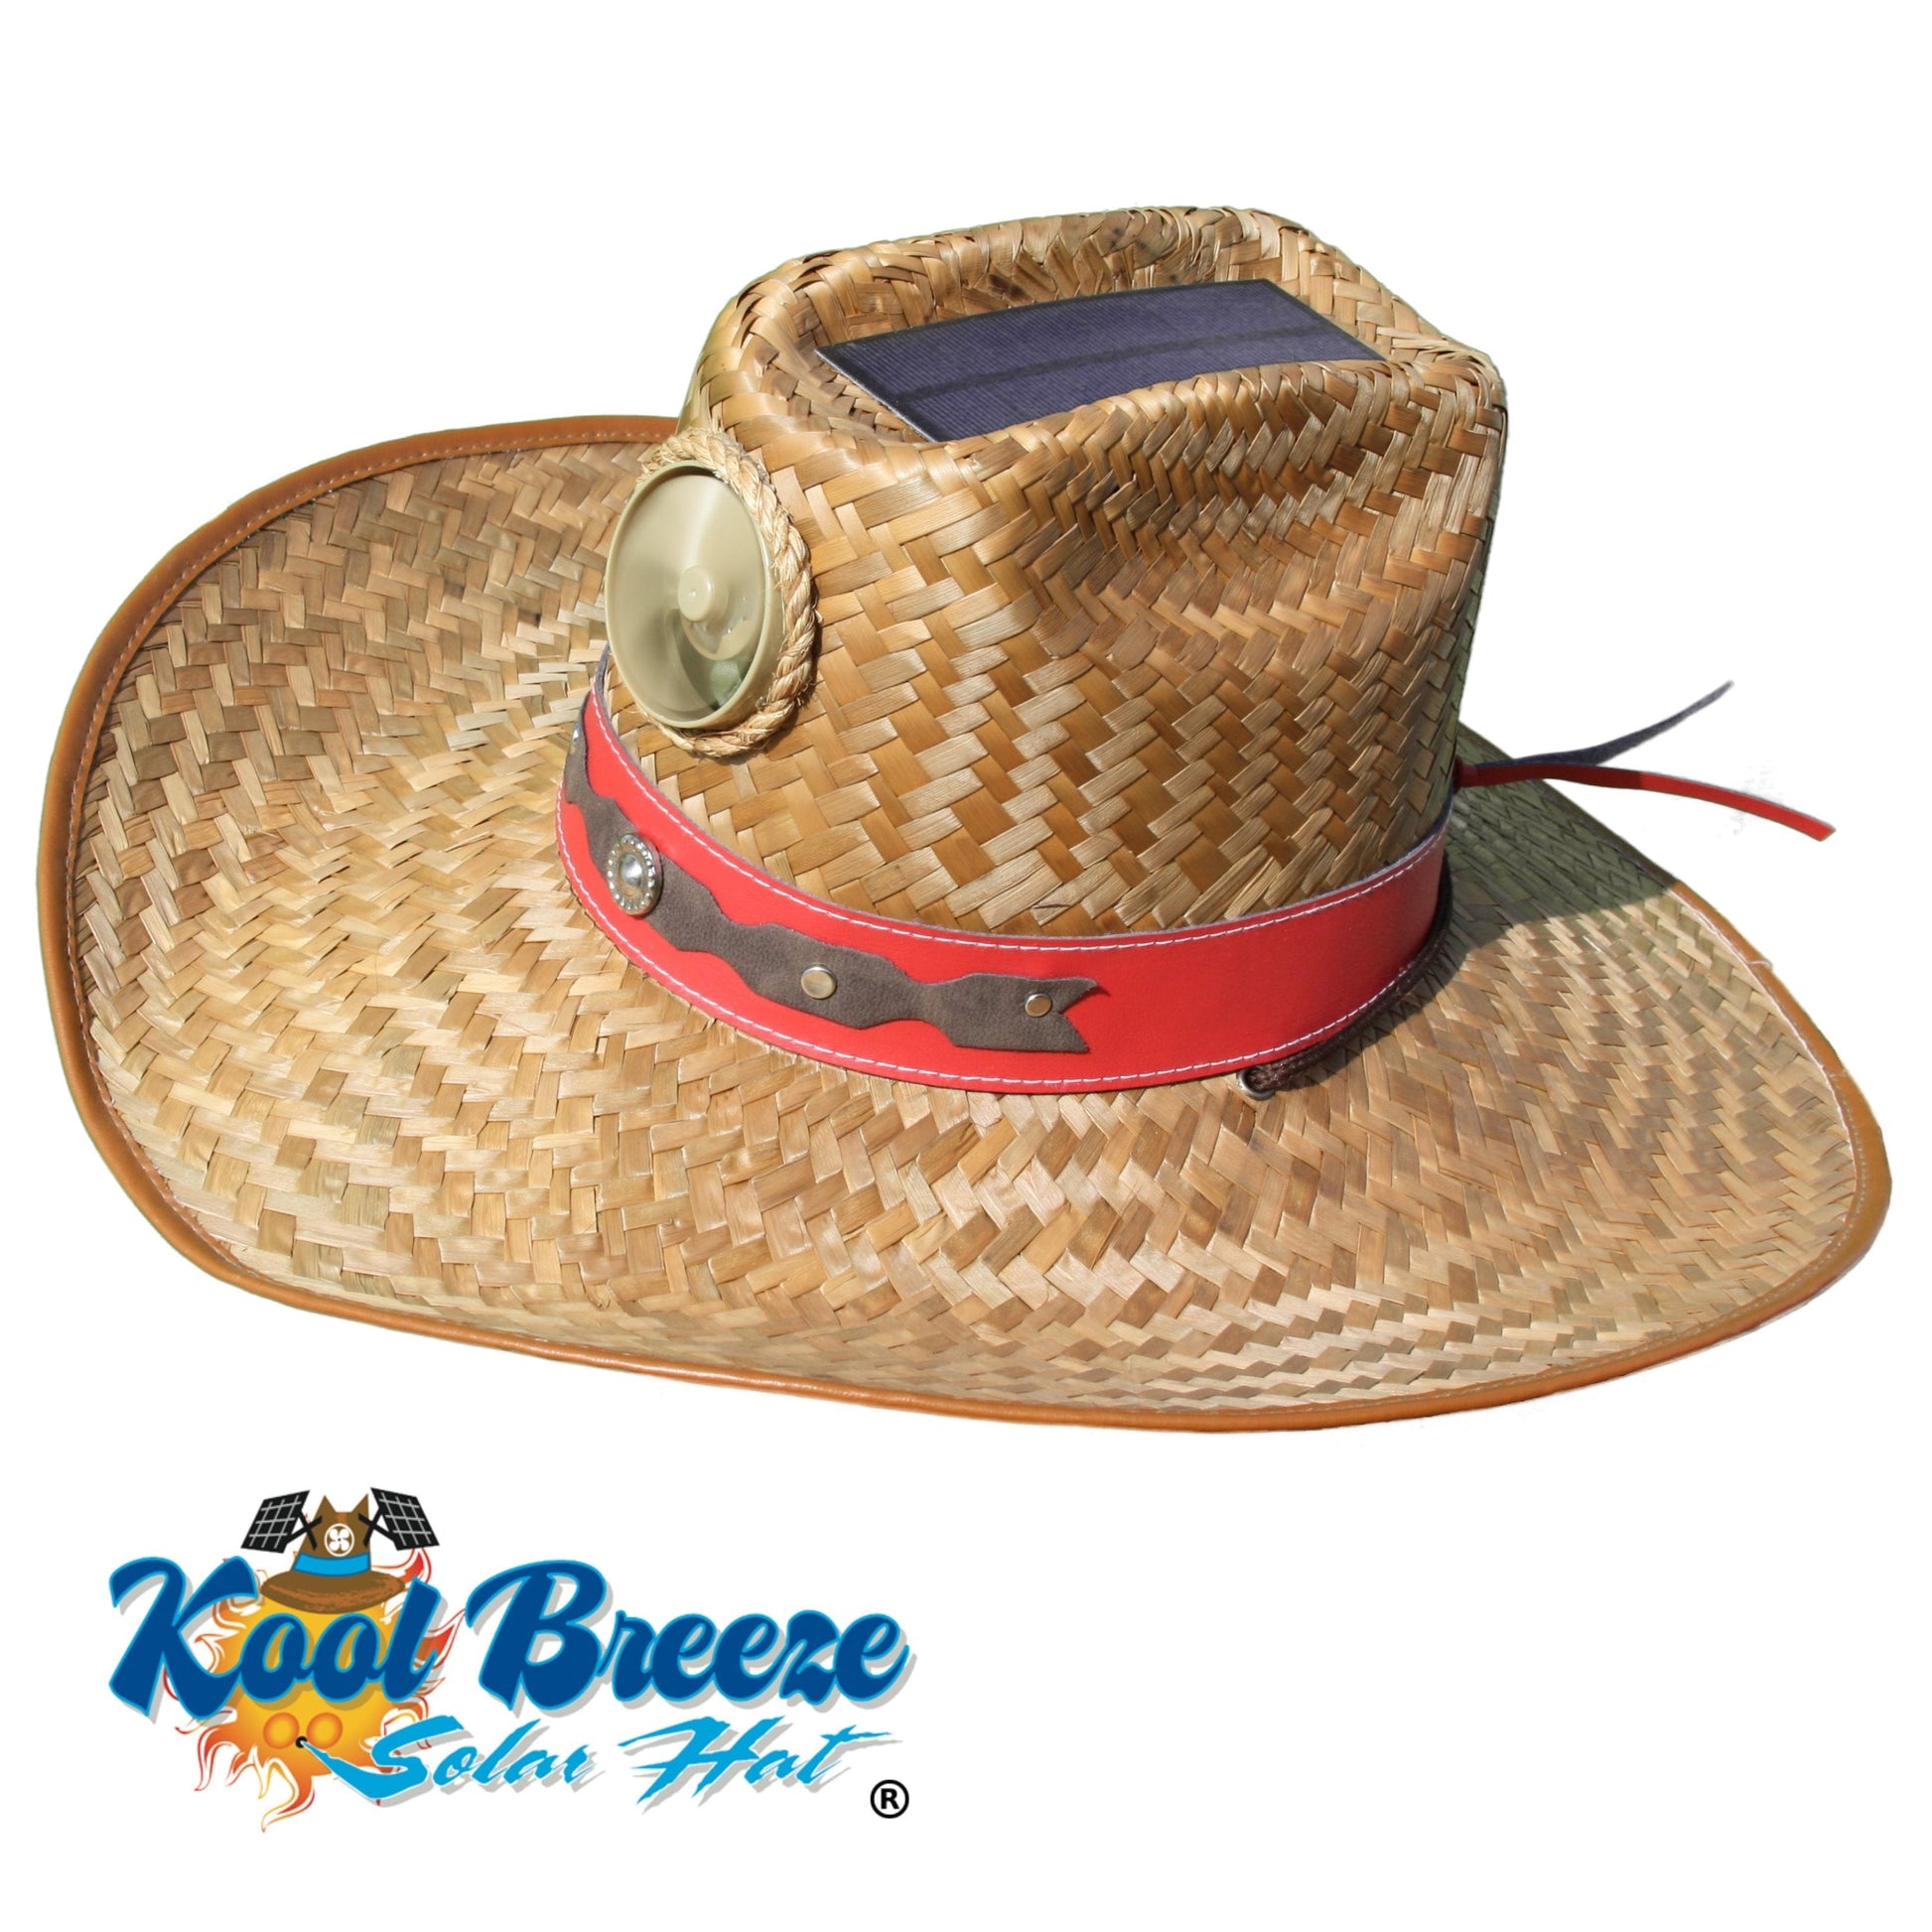 Wearing the Cowboy Straw hat with solar powered fan by Kool Breeze